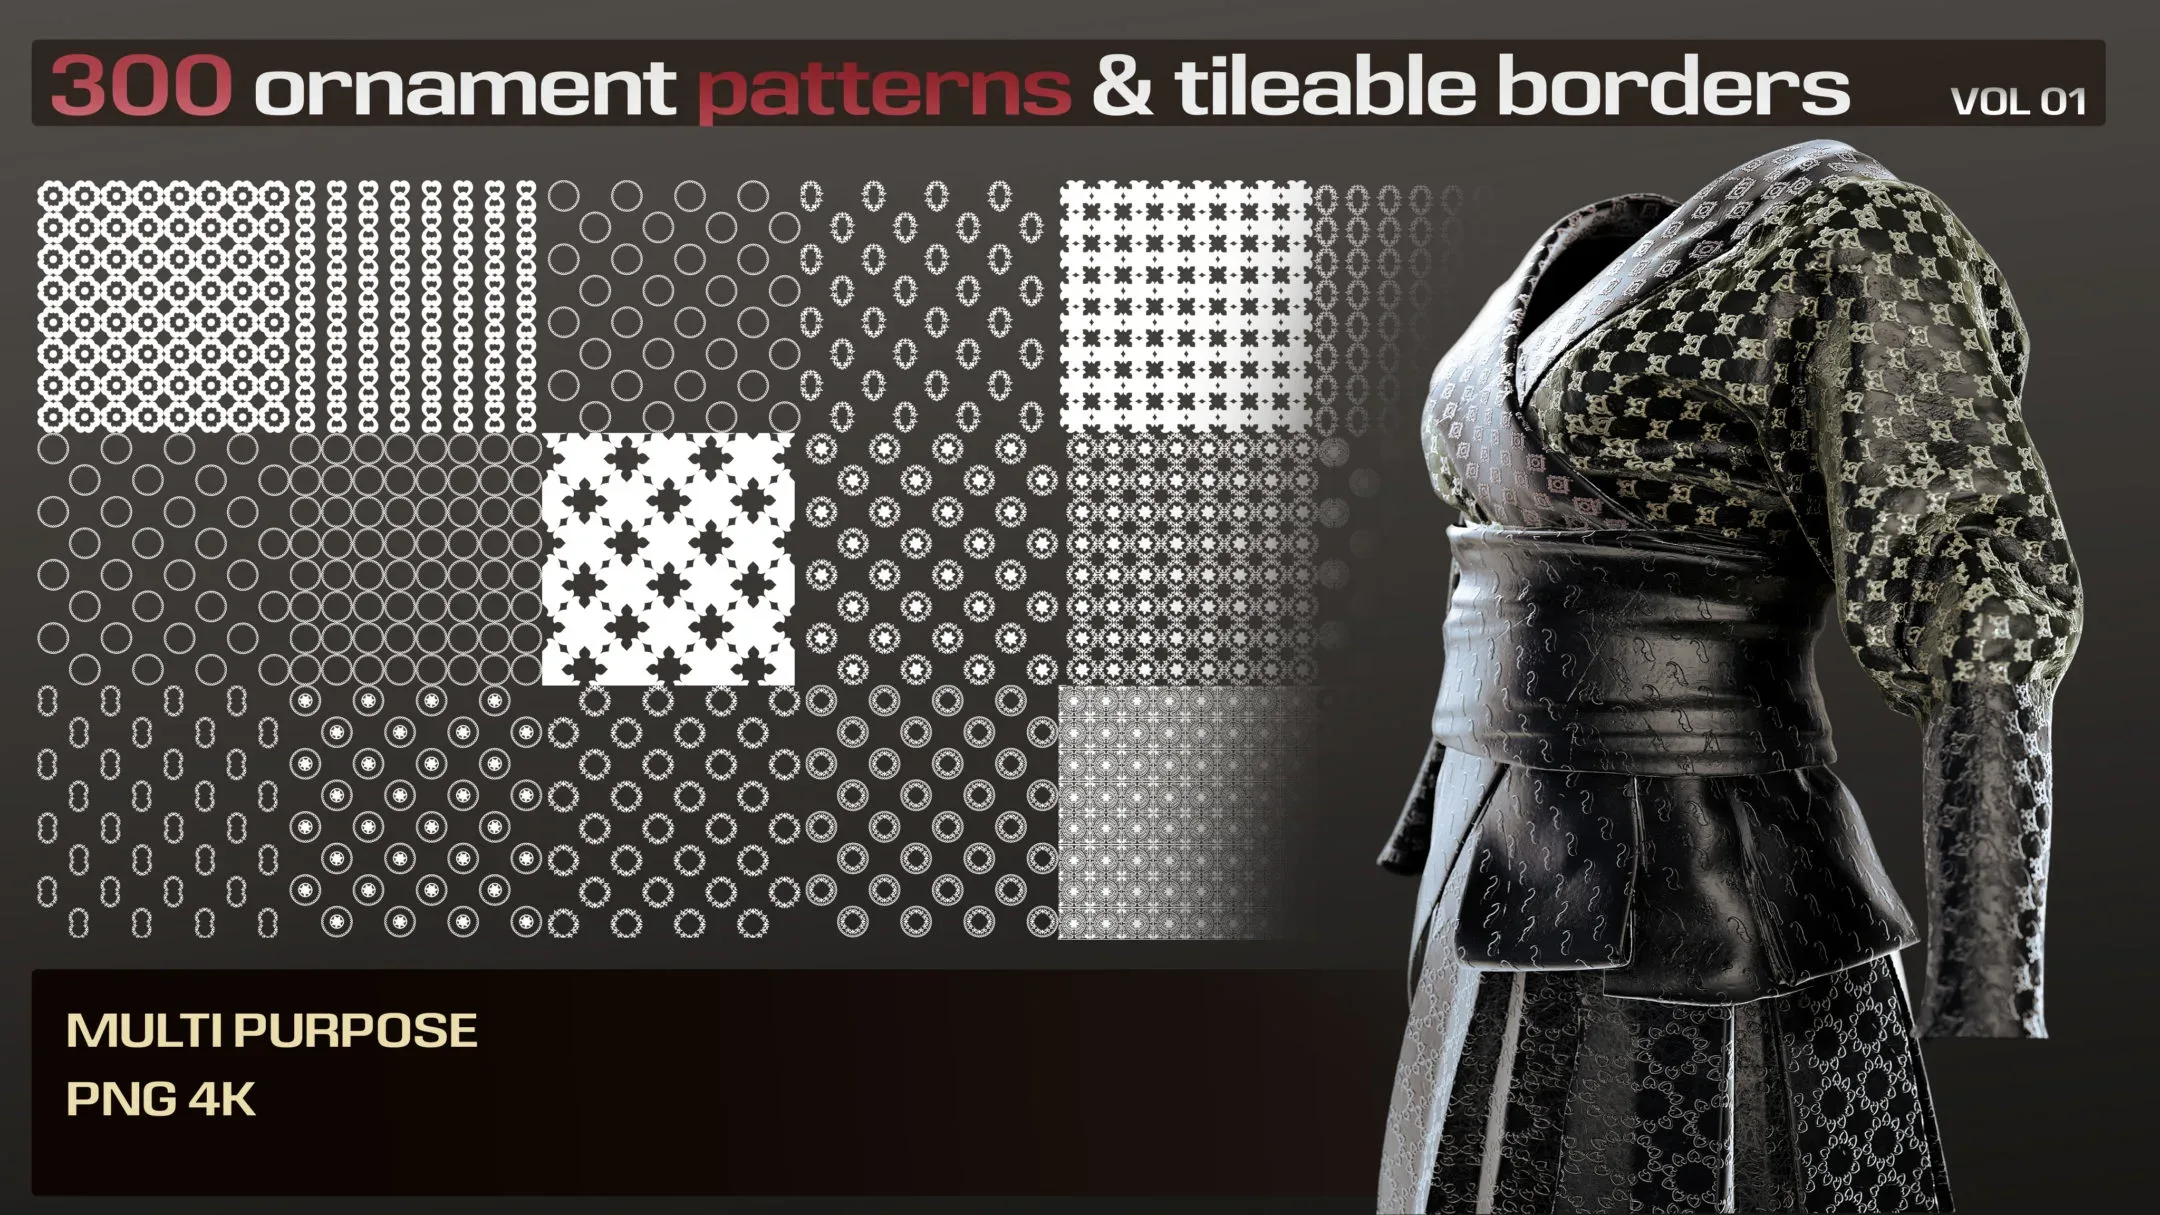 300 ornamental patterns & tileable borders VOL 01